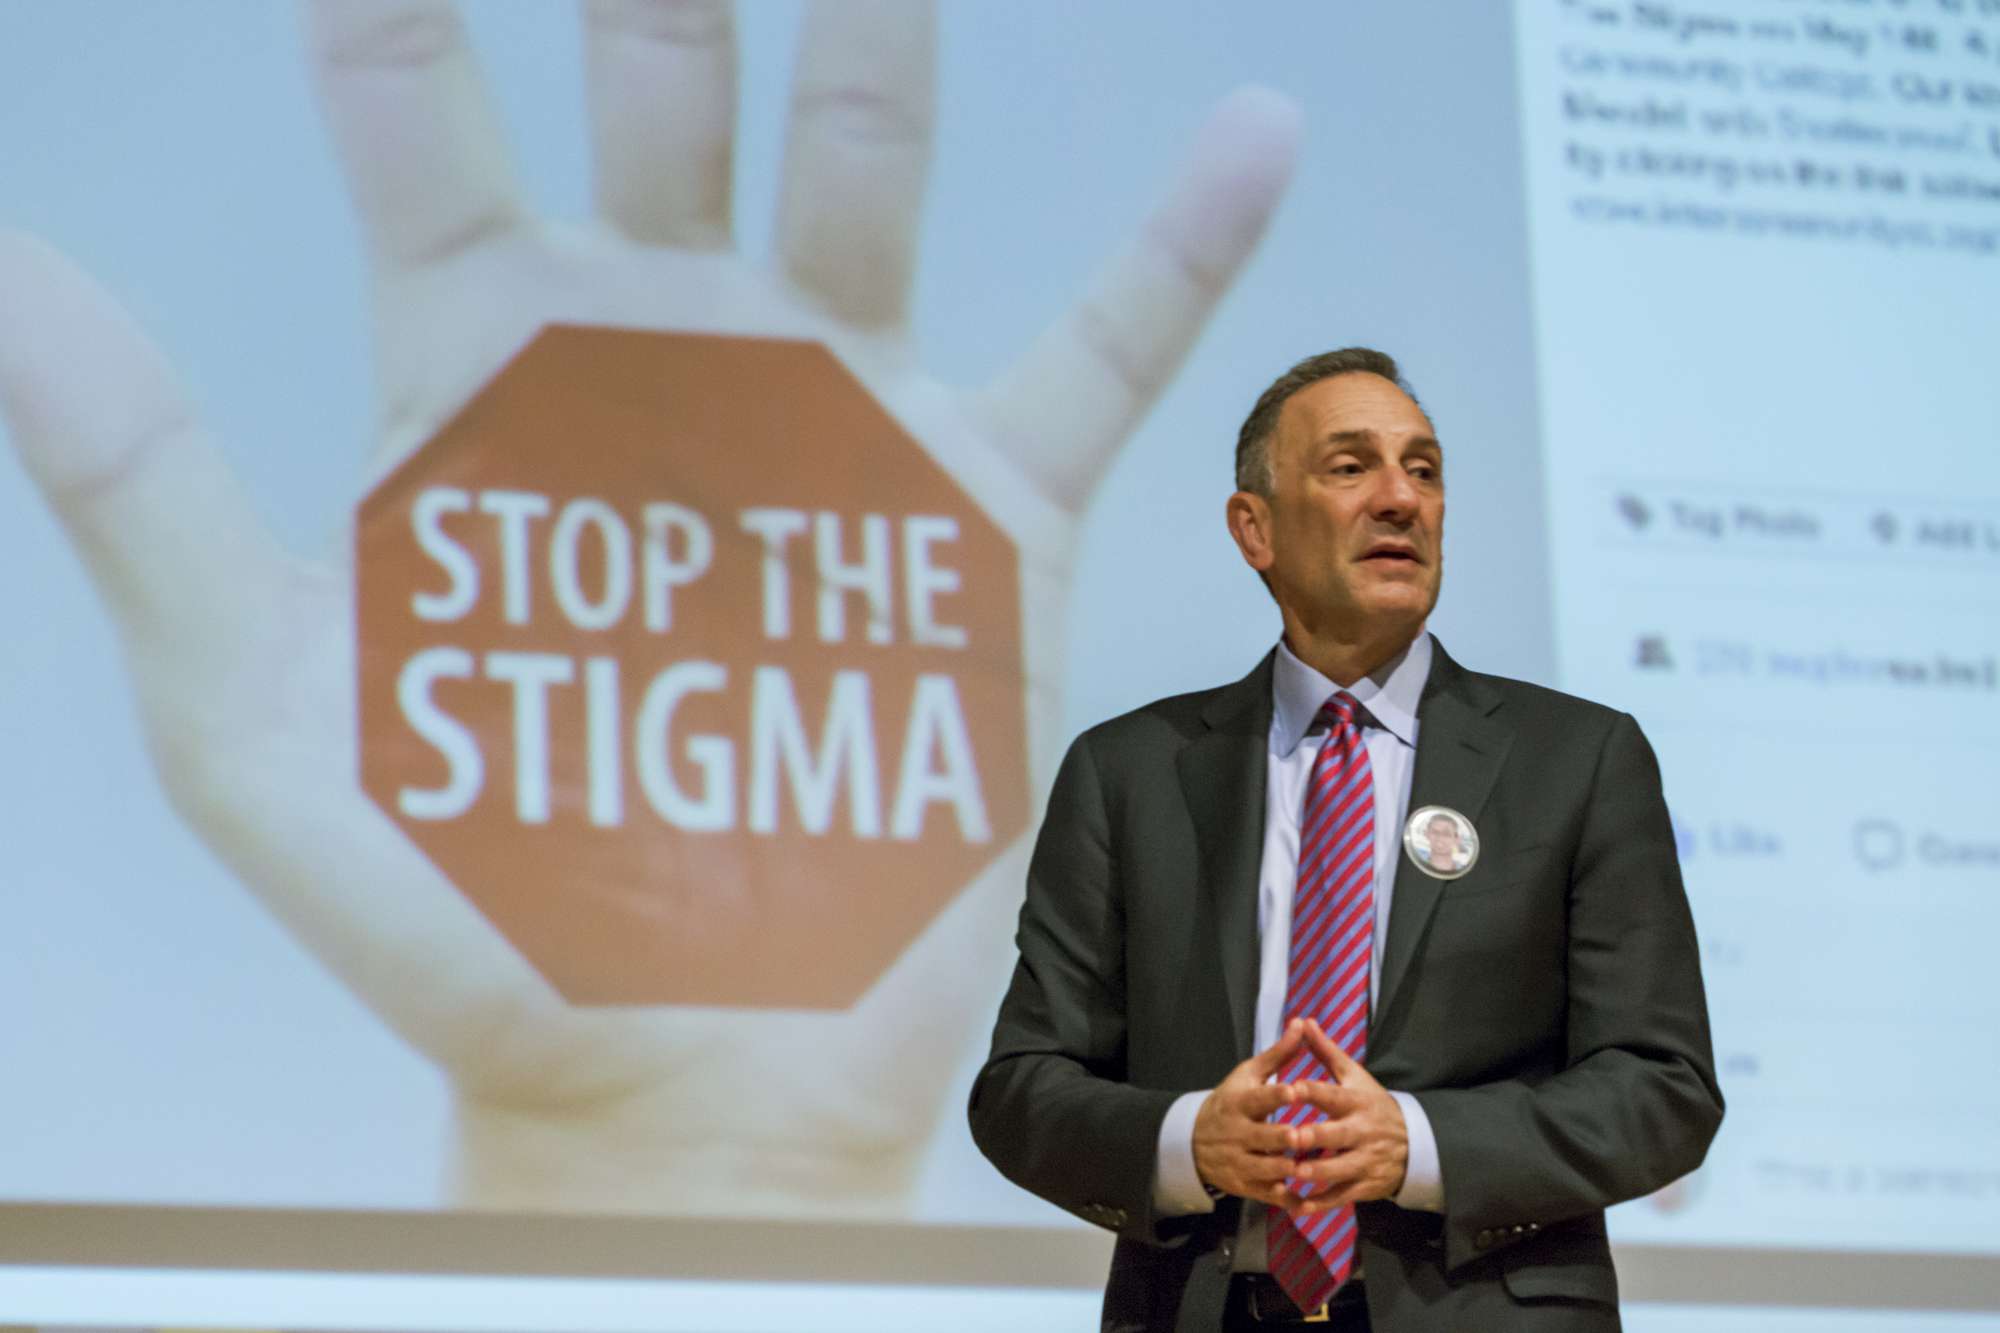 stop-the-stigma-gm-photo